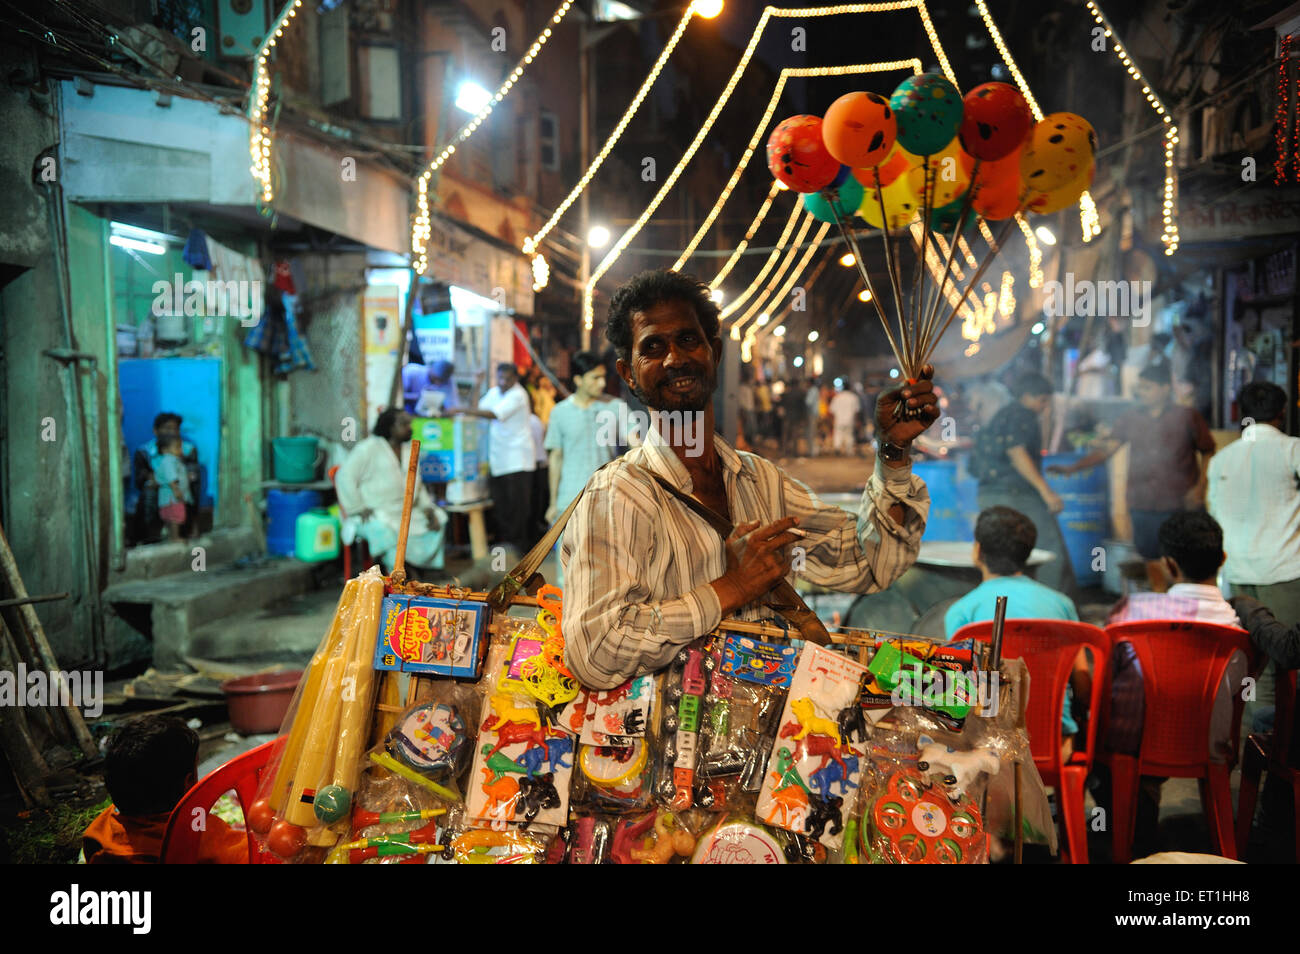 Ballonverkäufer; Kamathipura; Lal Bazar; Rotlichtbereich; Grant Road; Bombay; Mumbai; Maharashtra; Indien; Asien; Asiatisch, Indisch Stockfoto